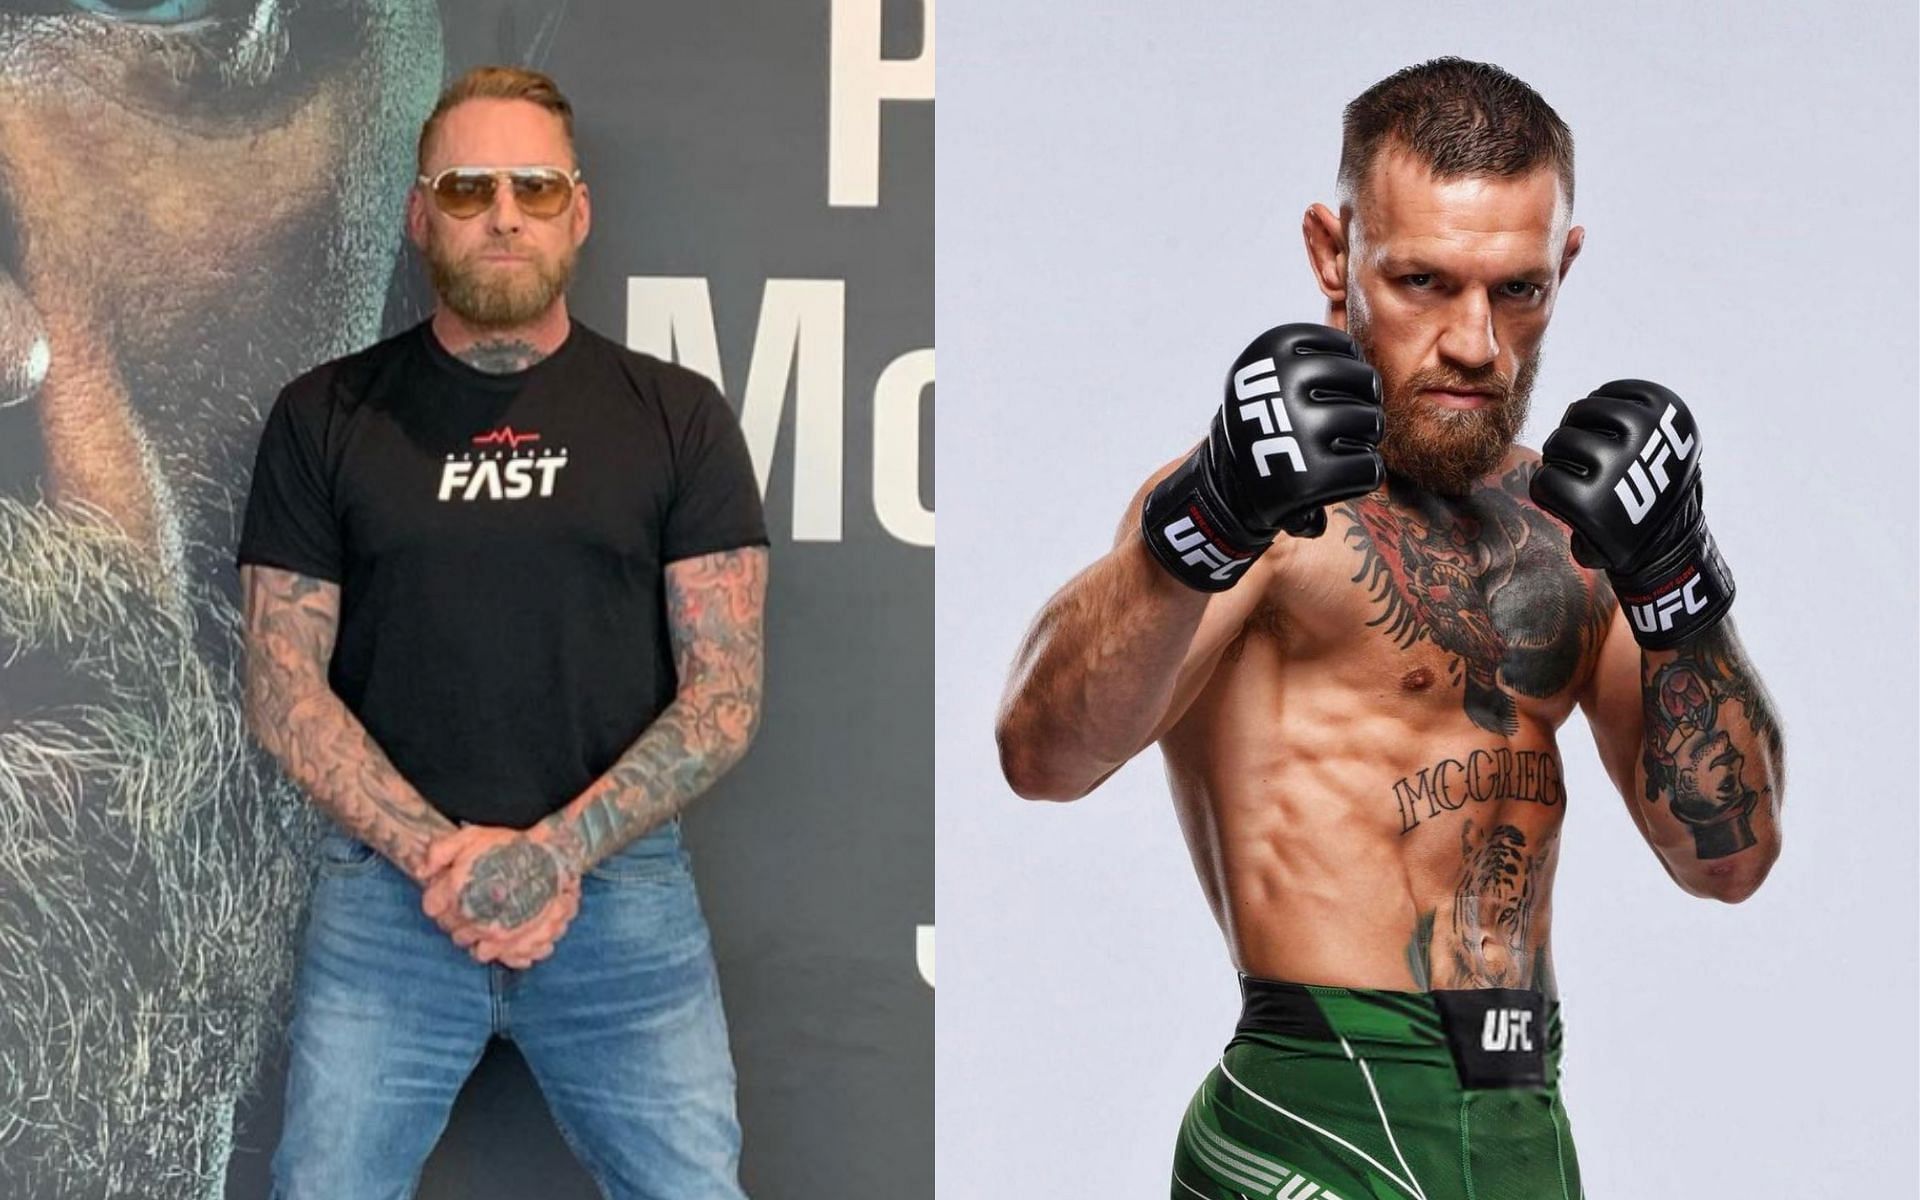 Marcus Deegan (left), Conor McGregor (right) [Credits: @marcusdeegan via Instagram, @UFC via Twitter]